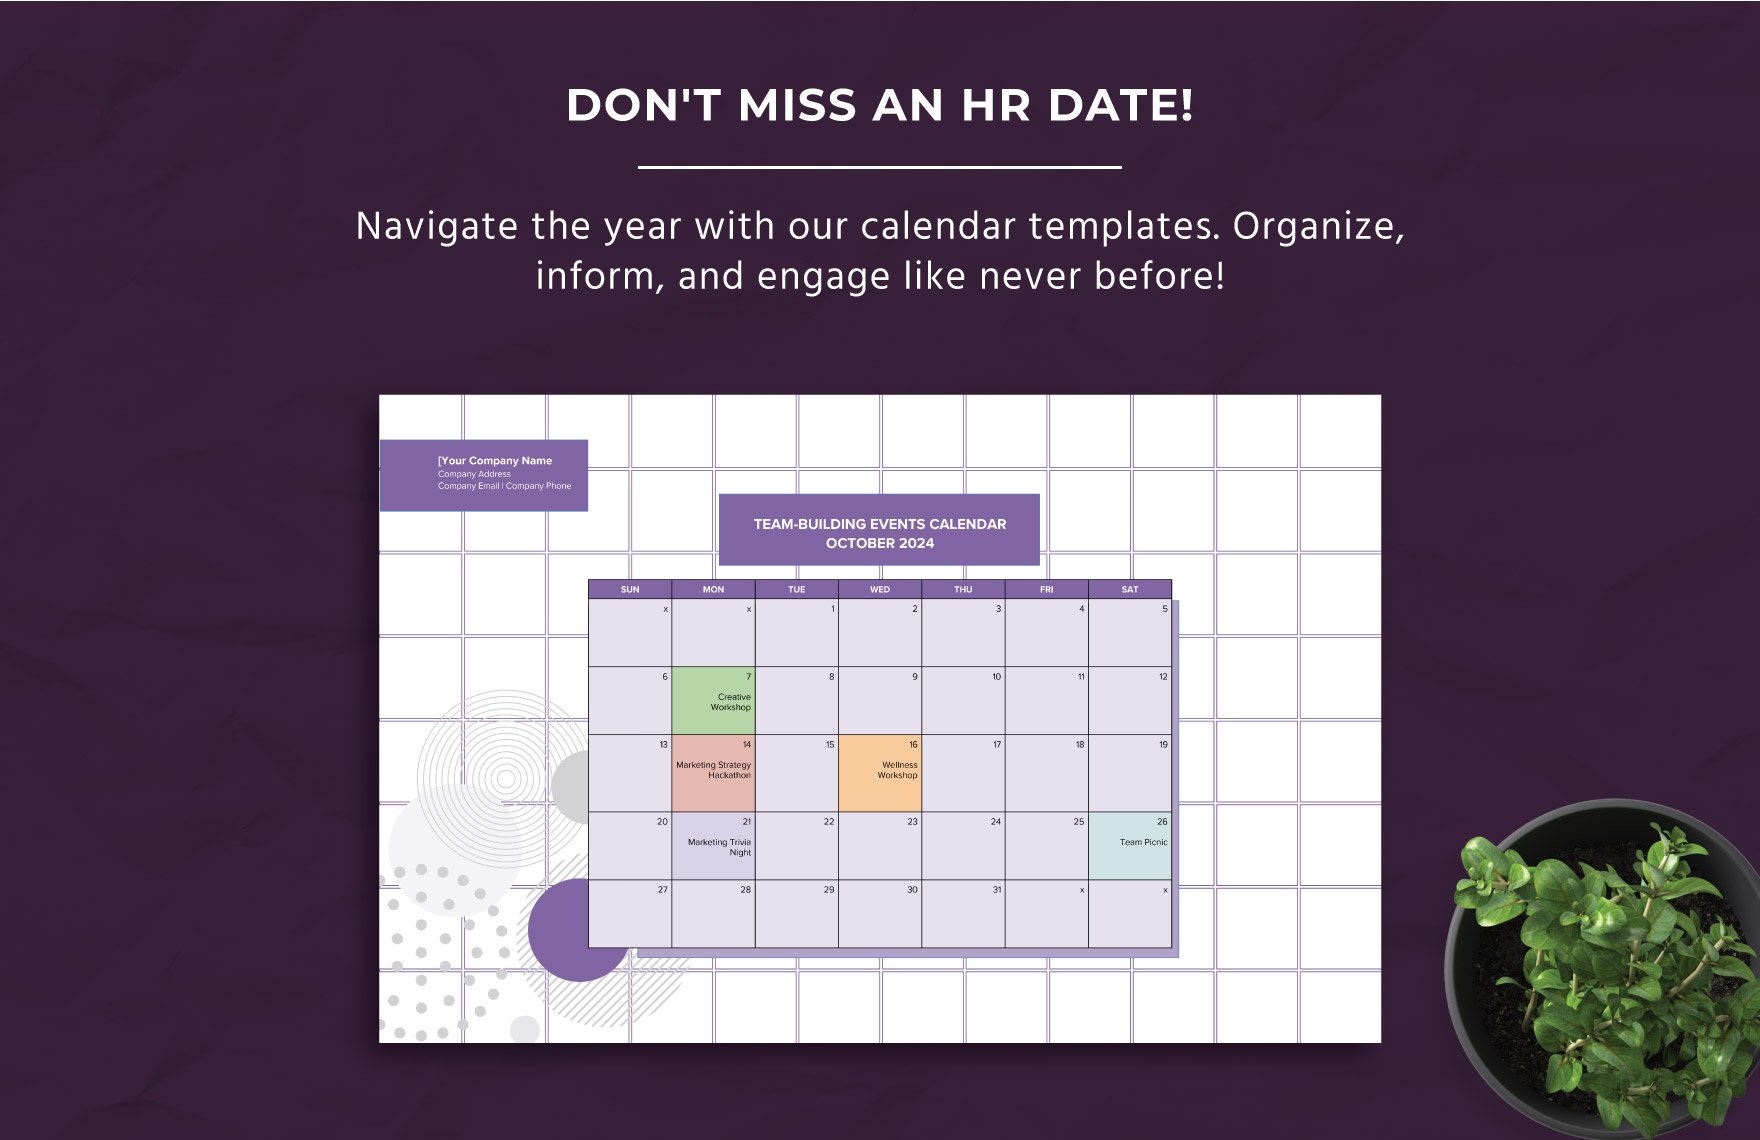 Team-Building Events Calendar Template